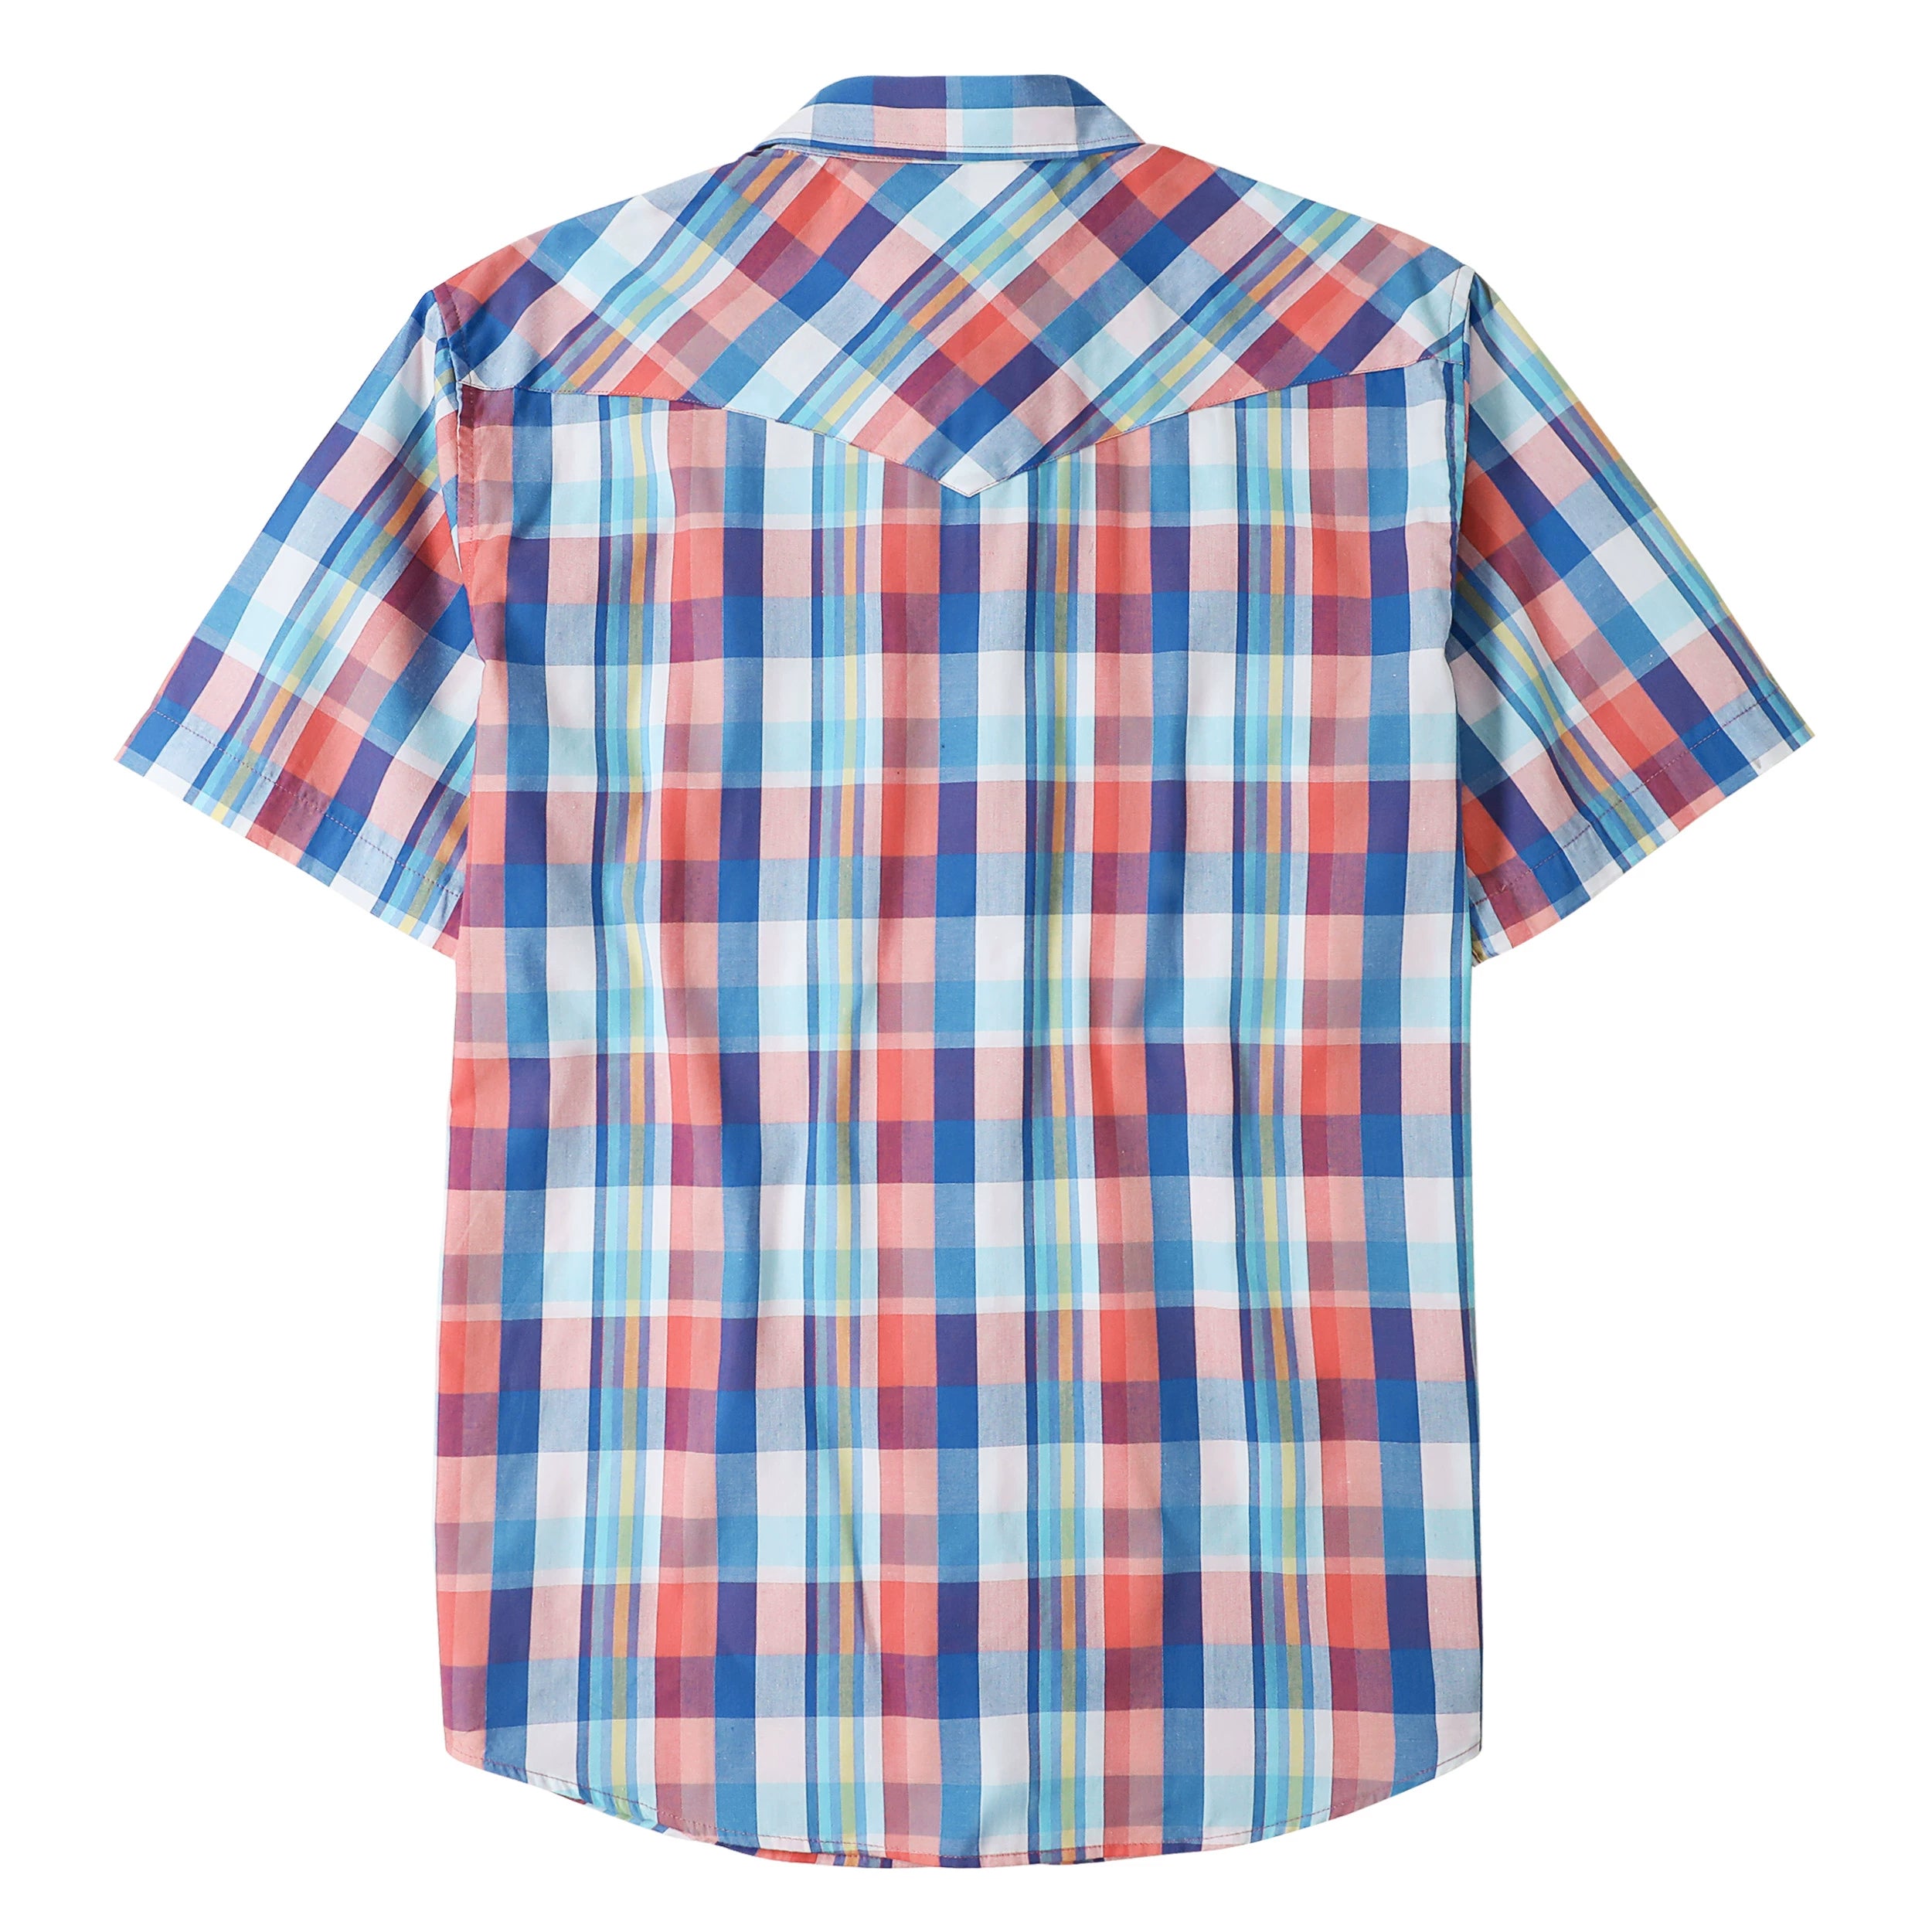 Dubinik® Western Shirts for Men Short Sleeve Plaid Pearl Snap Shirts for Men Button Up Shirt Cowboy Casual Work Shirt#41021